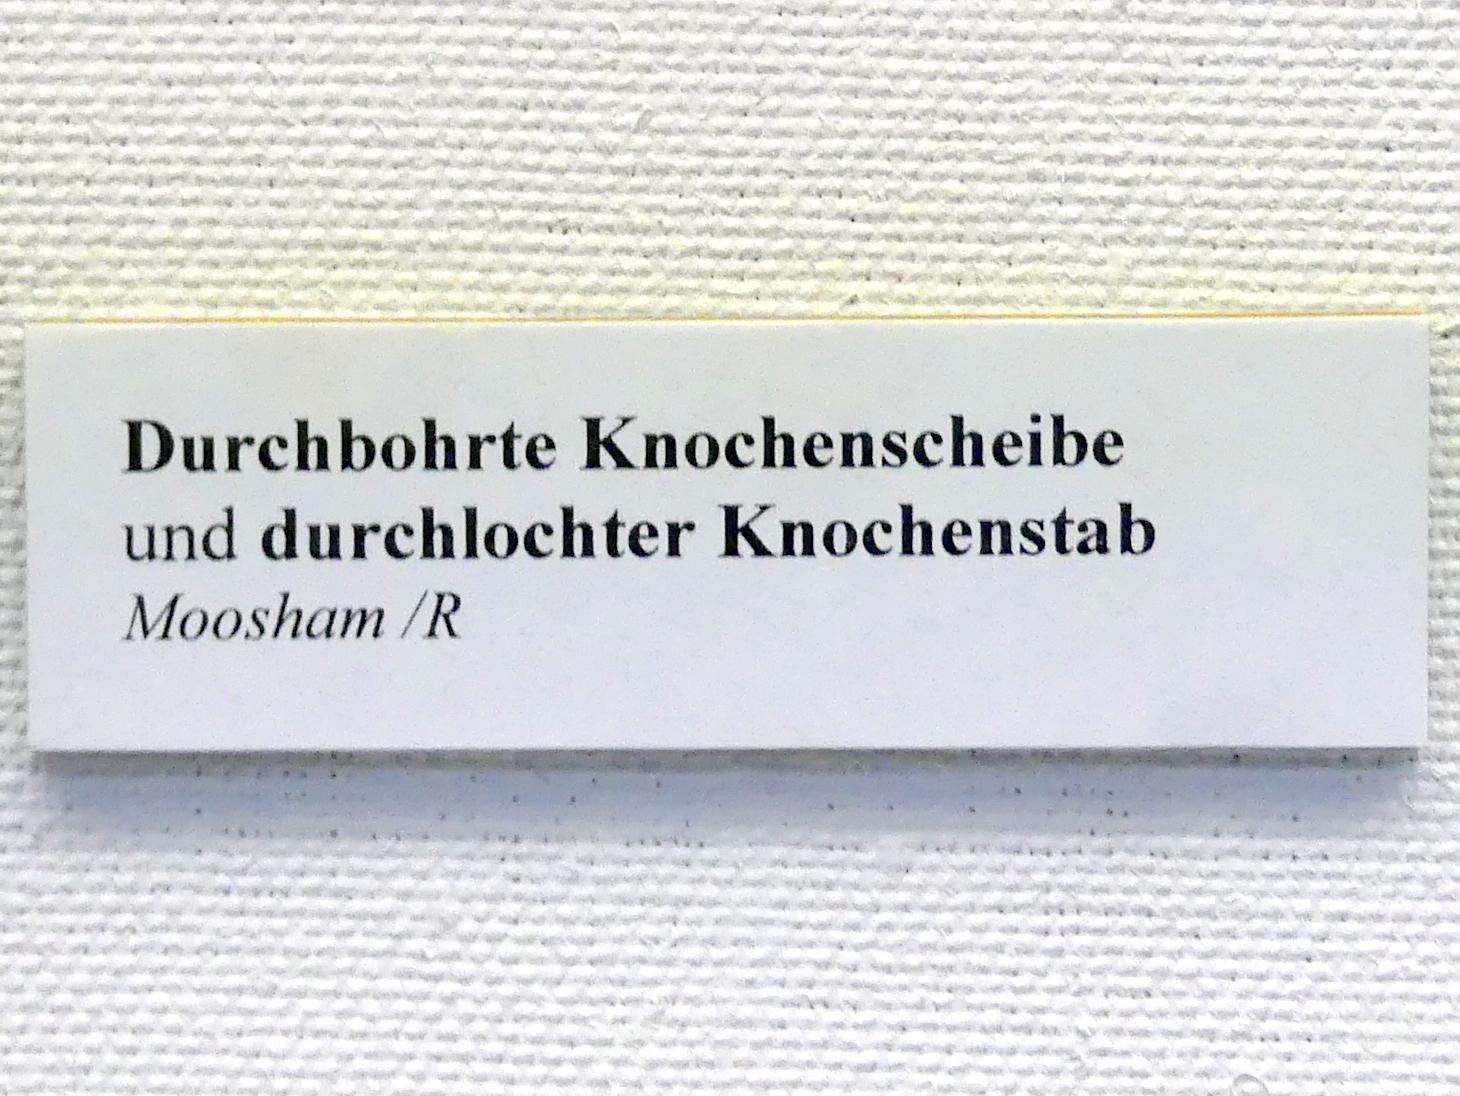 Durchbohrte Knochenscheibe, Endneolithikum, 2800 - 1700 v. Chr., Bild 2/2